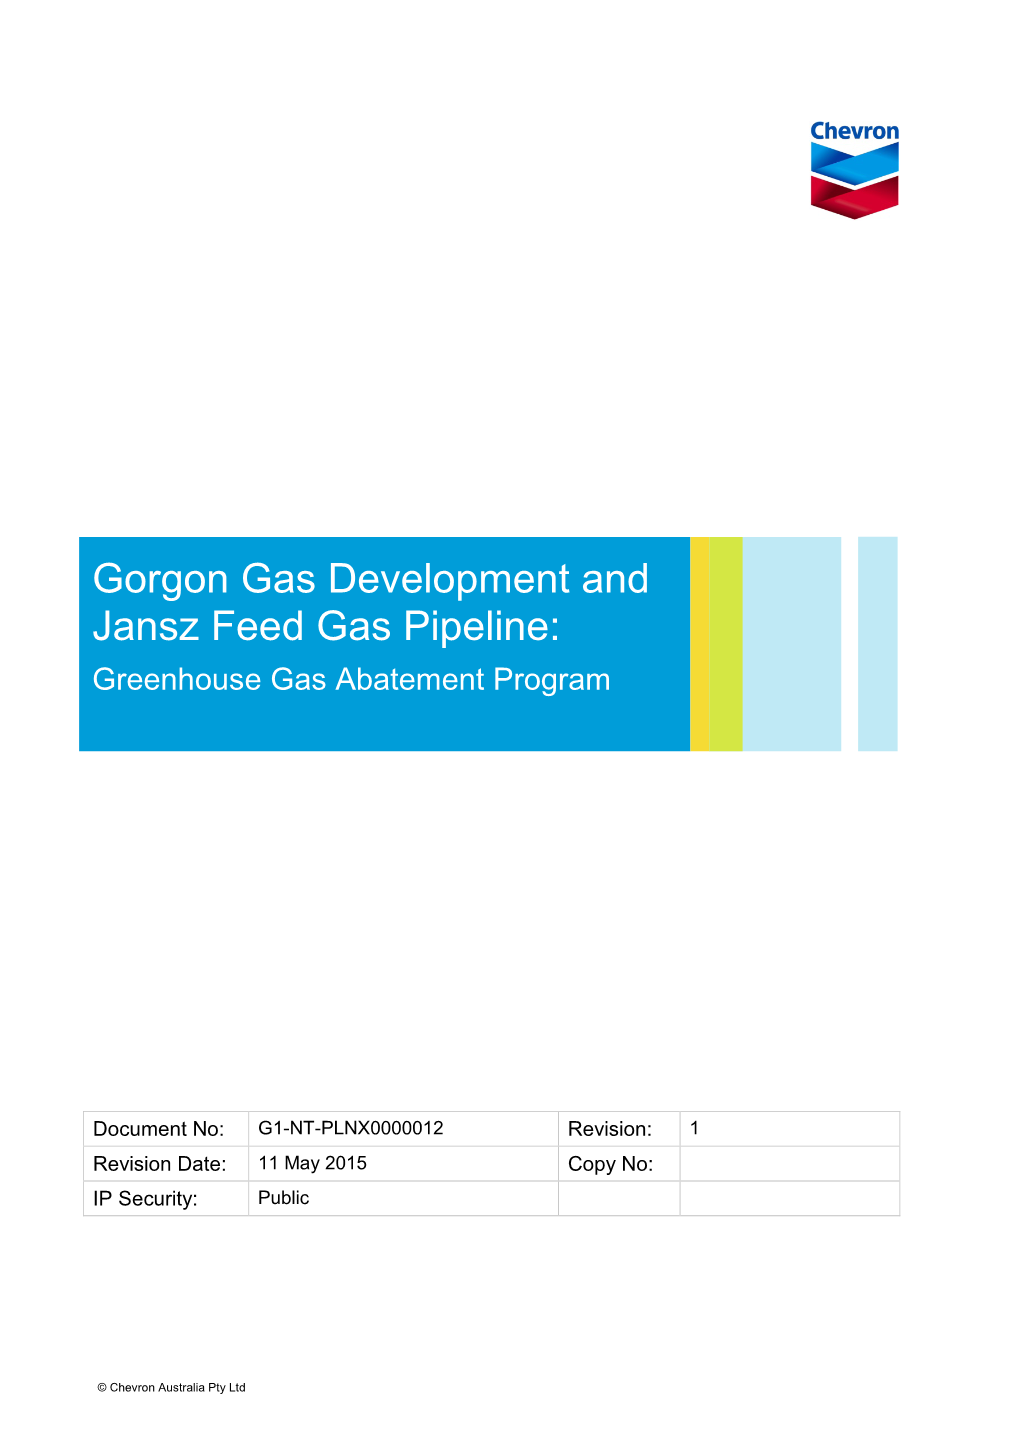 Greenhouse Gas Abatement Program